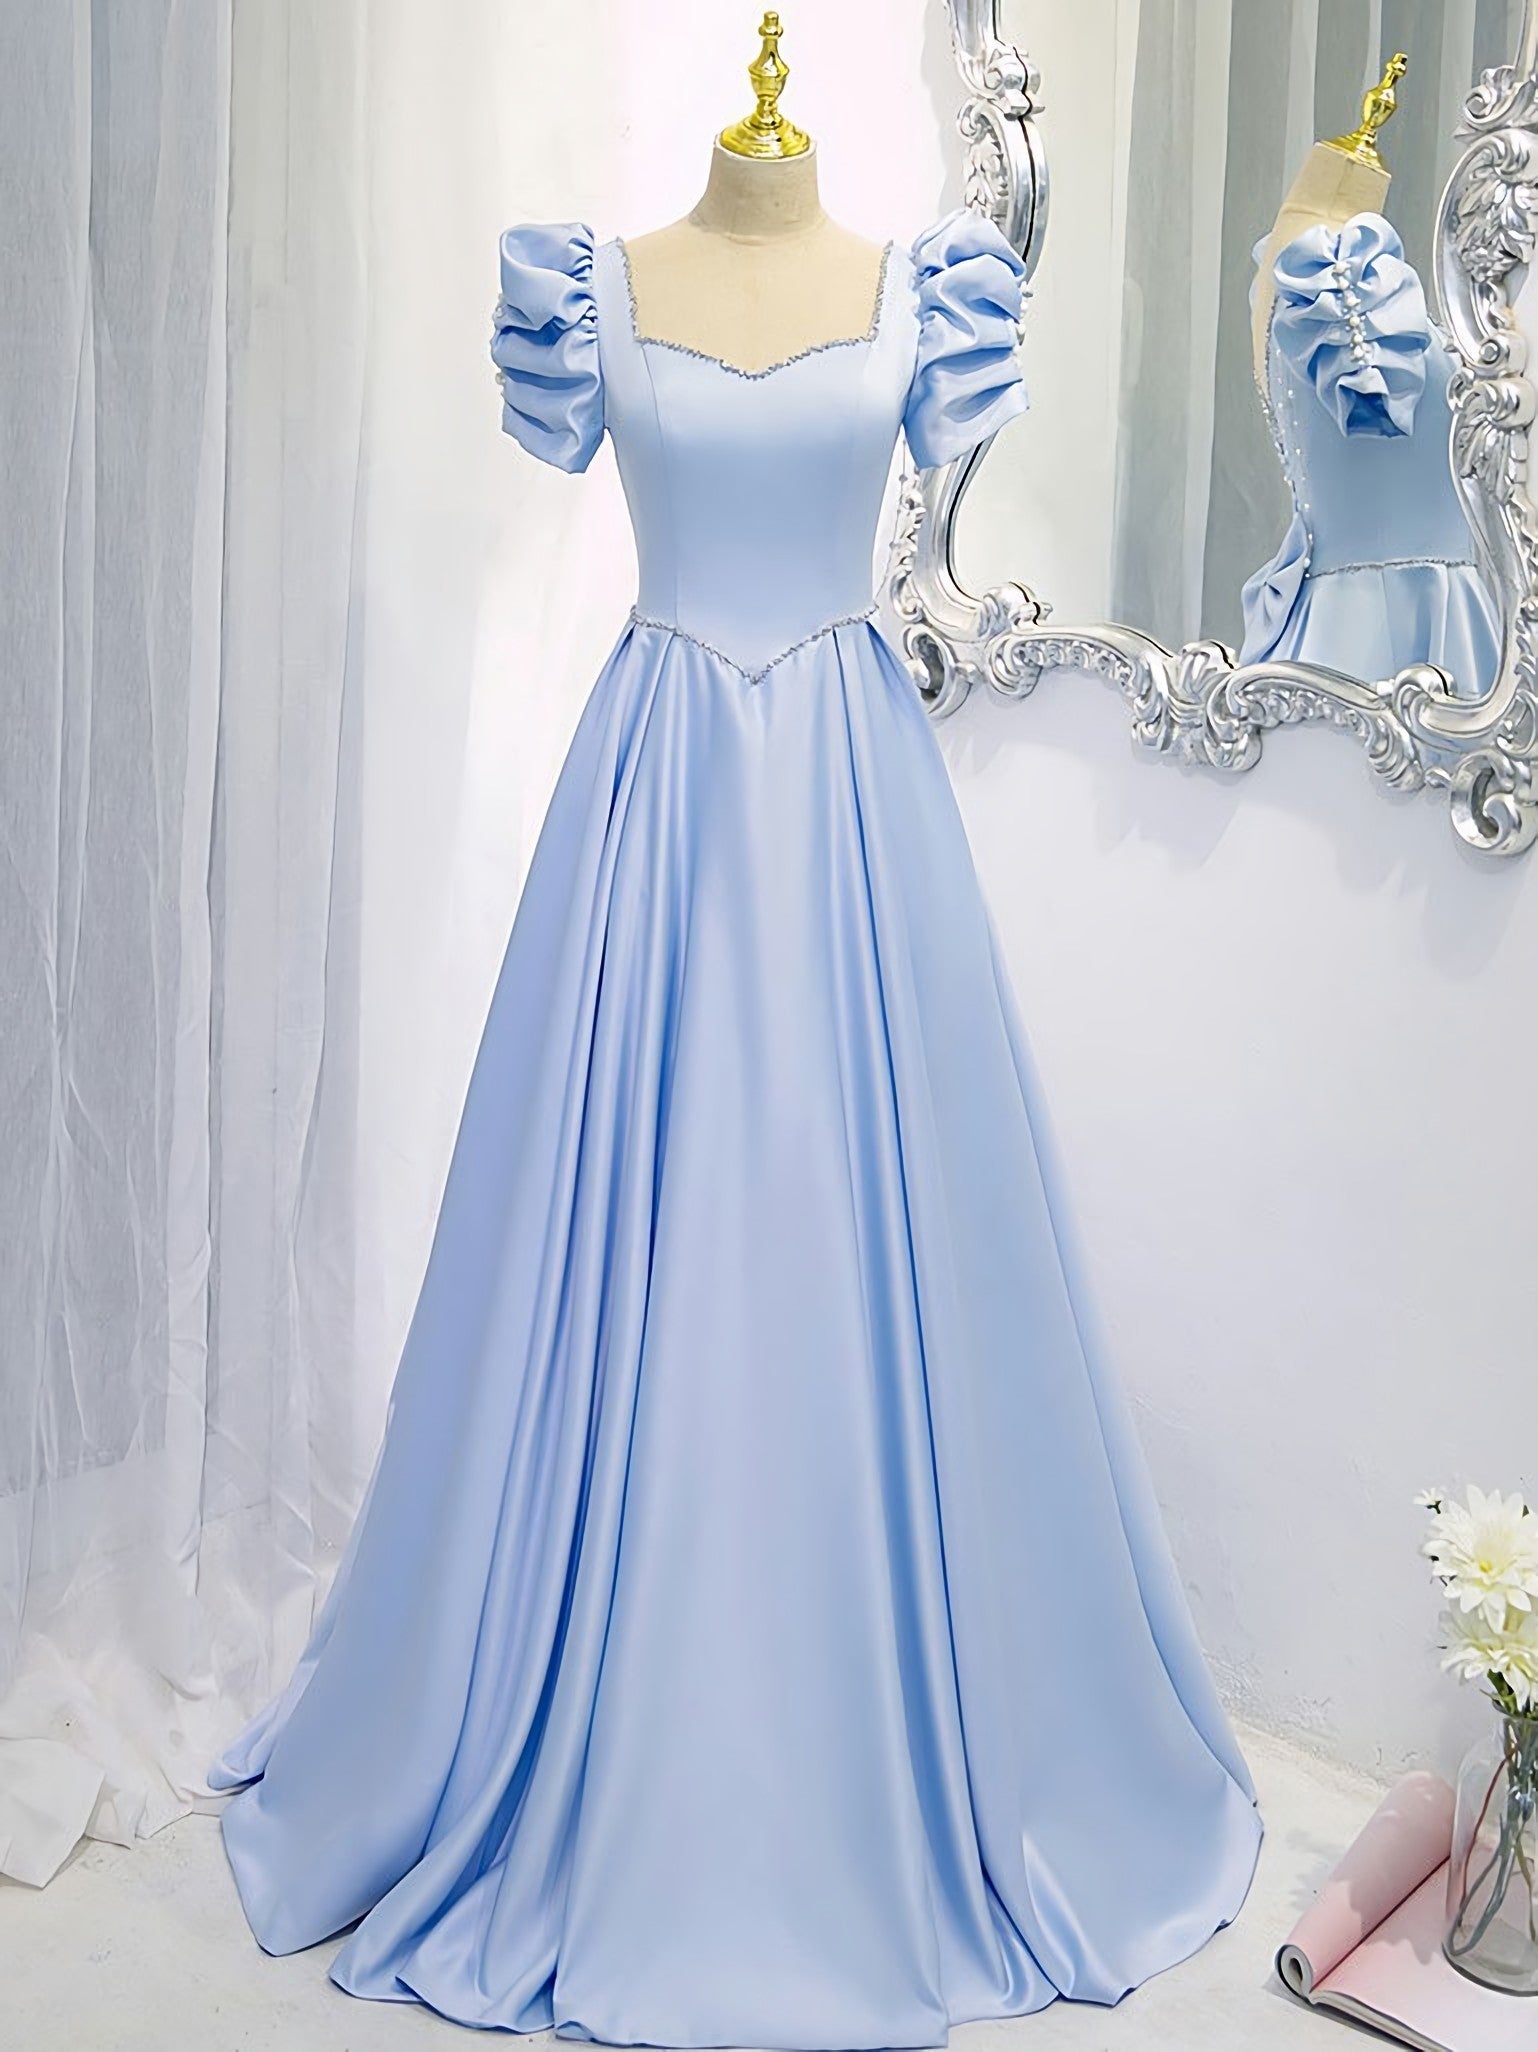 Blue Satin Backless Long Corset Prom Dress, Blue Evening Dress outfit, Prom Dress Store Near Me